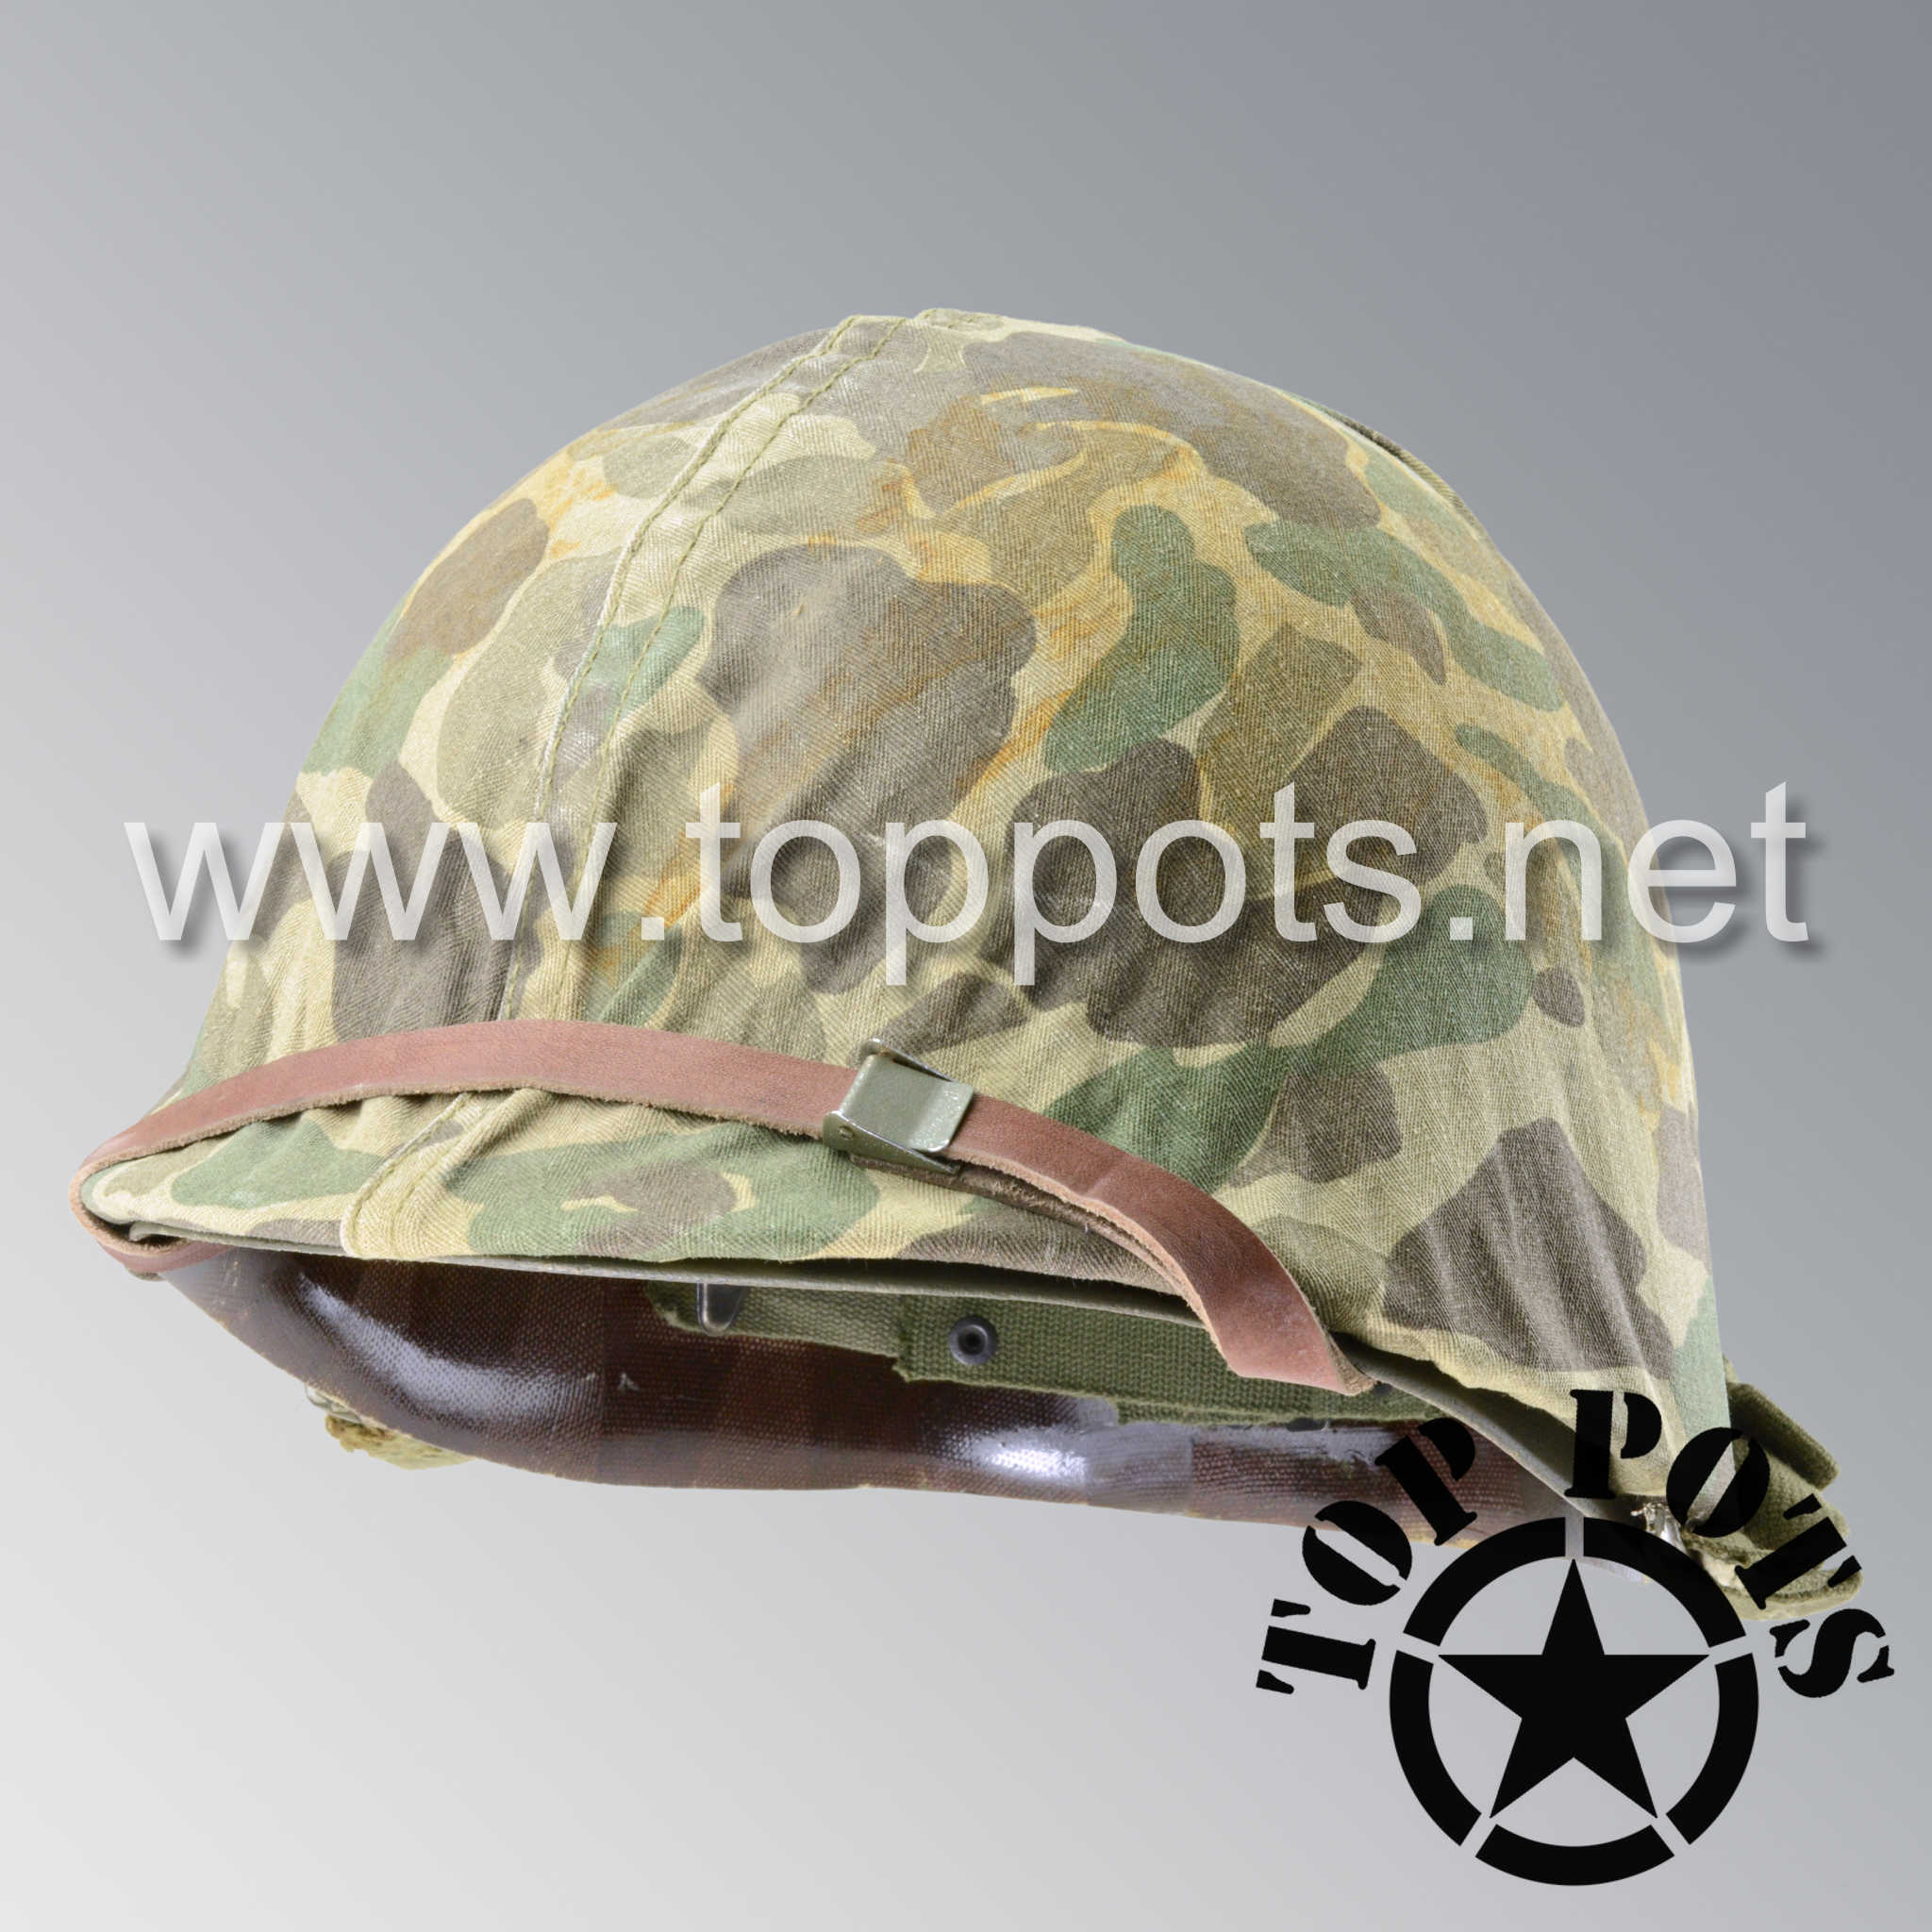 CAMO HQ - South Korean Marine Corps Turtle Shell CAMO Duffle bag